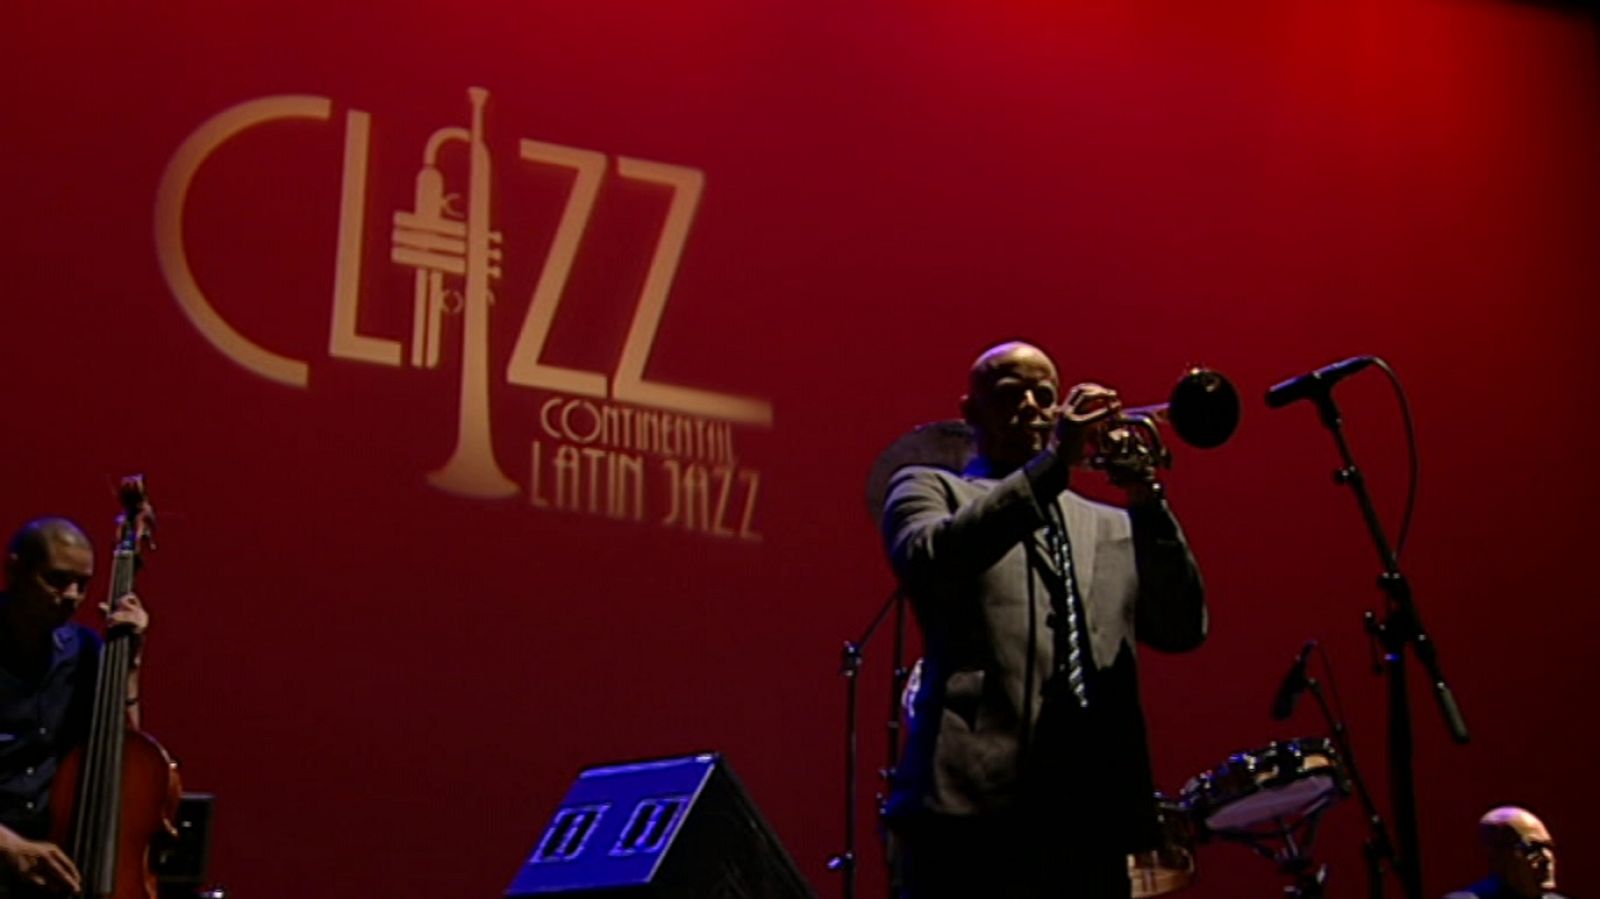 Festivales de verano - Clazz 2013 Continental Latin Jazz: Eddie Palmieri & Afro Caribean Jazz All Stars - RTVE.es